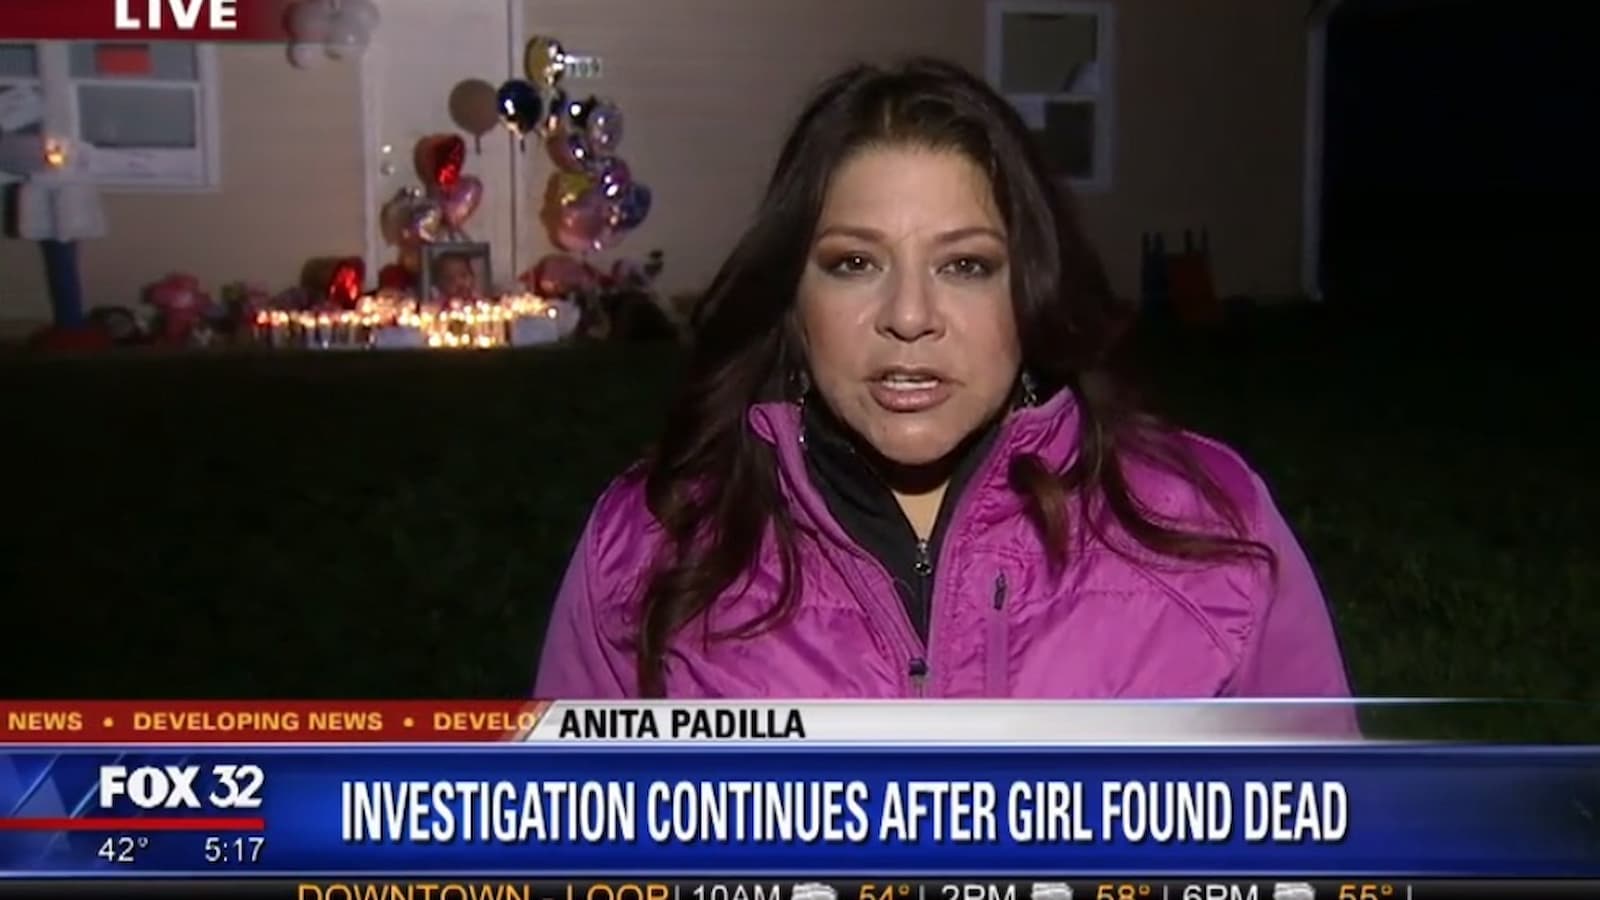 Fox 32 News' Anita Padilla leaves, sparking speculation online